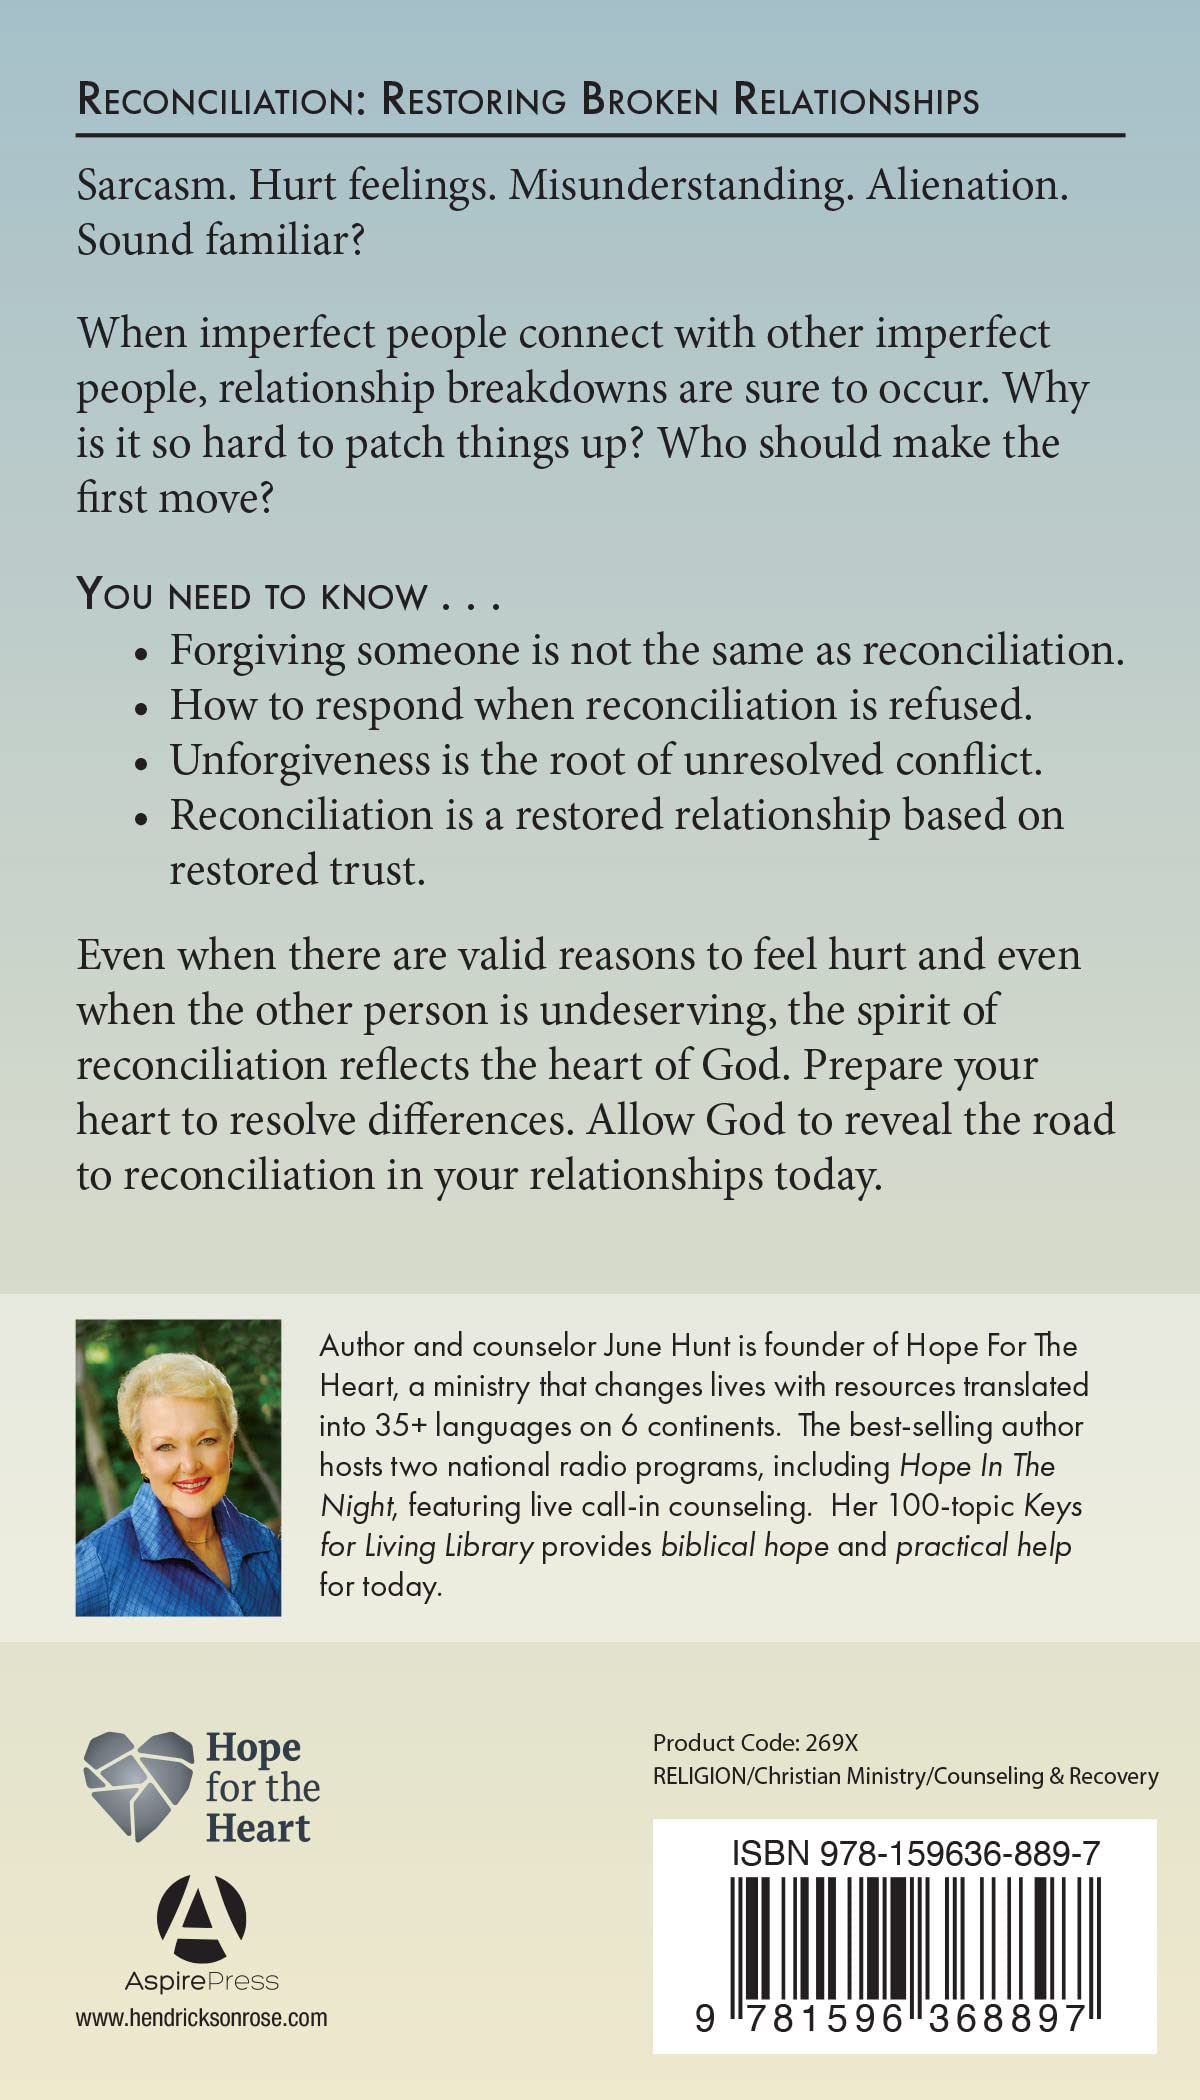 Reconciliation: Restoring Broken Relationships (Hope for the Heart)